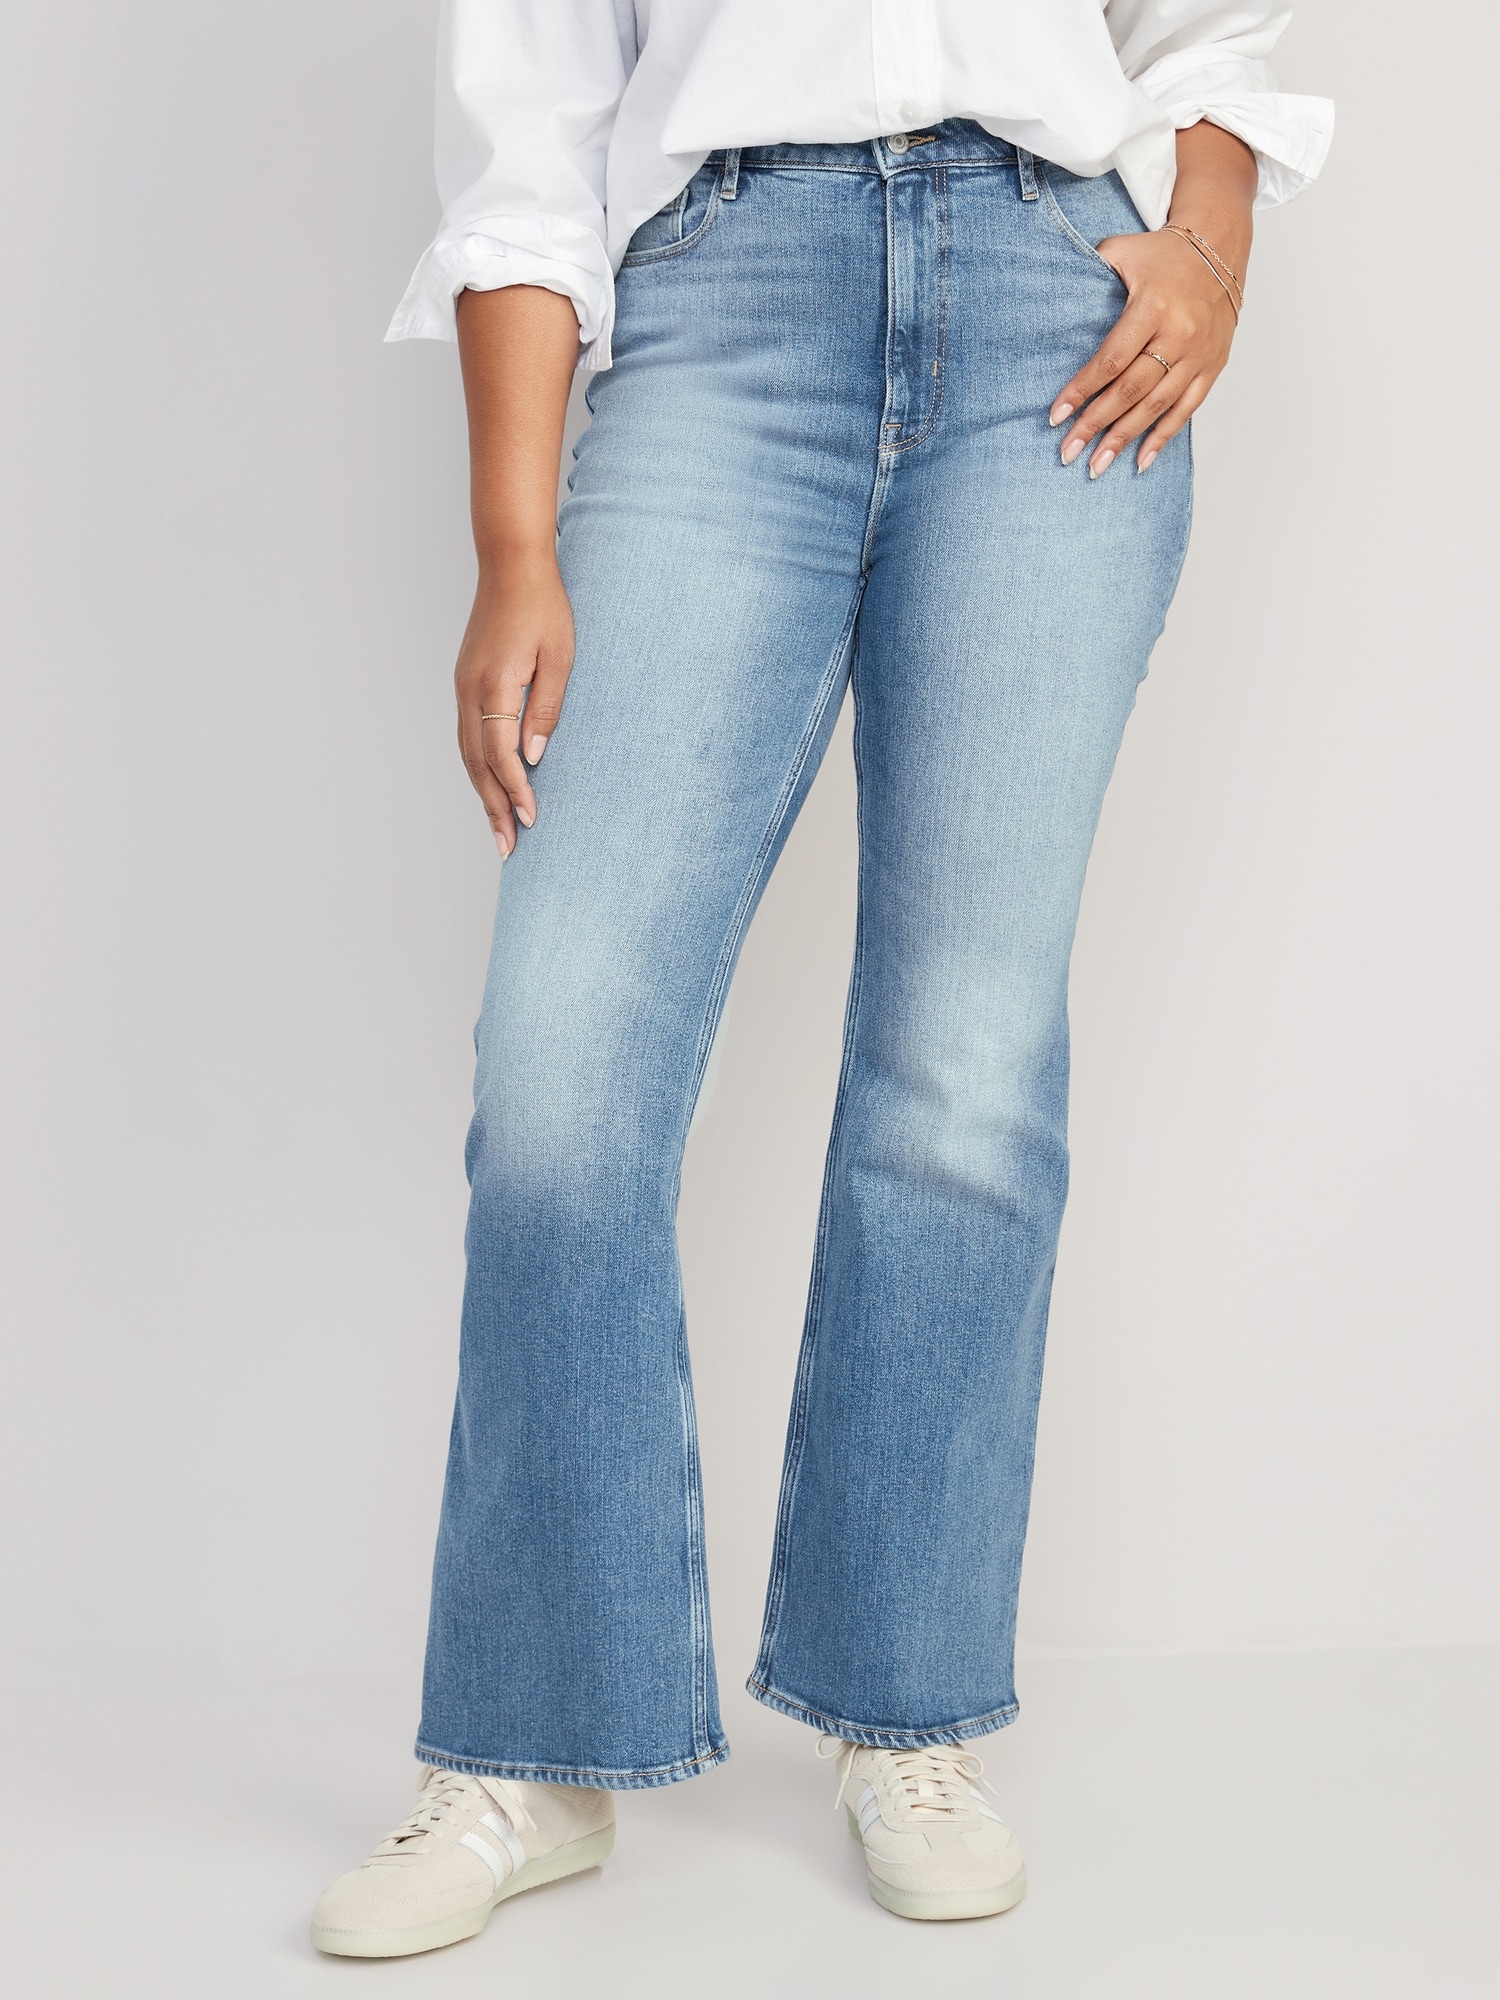 Basics High Rise 5 Pocket Flared Jeans